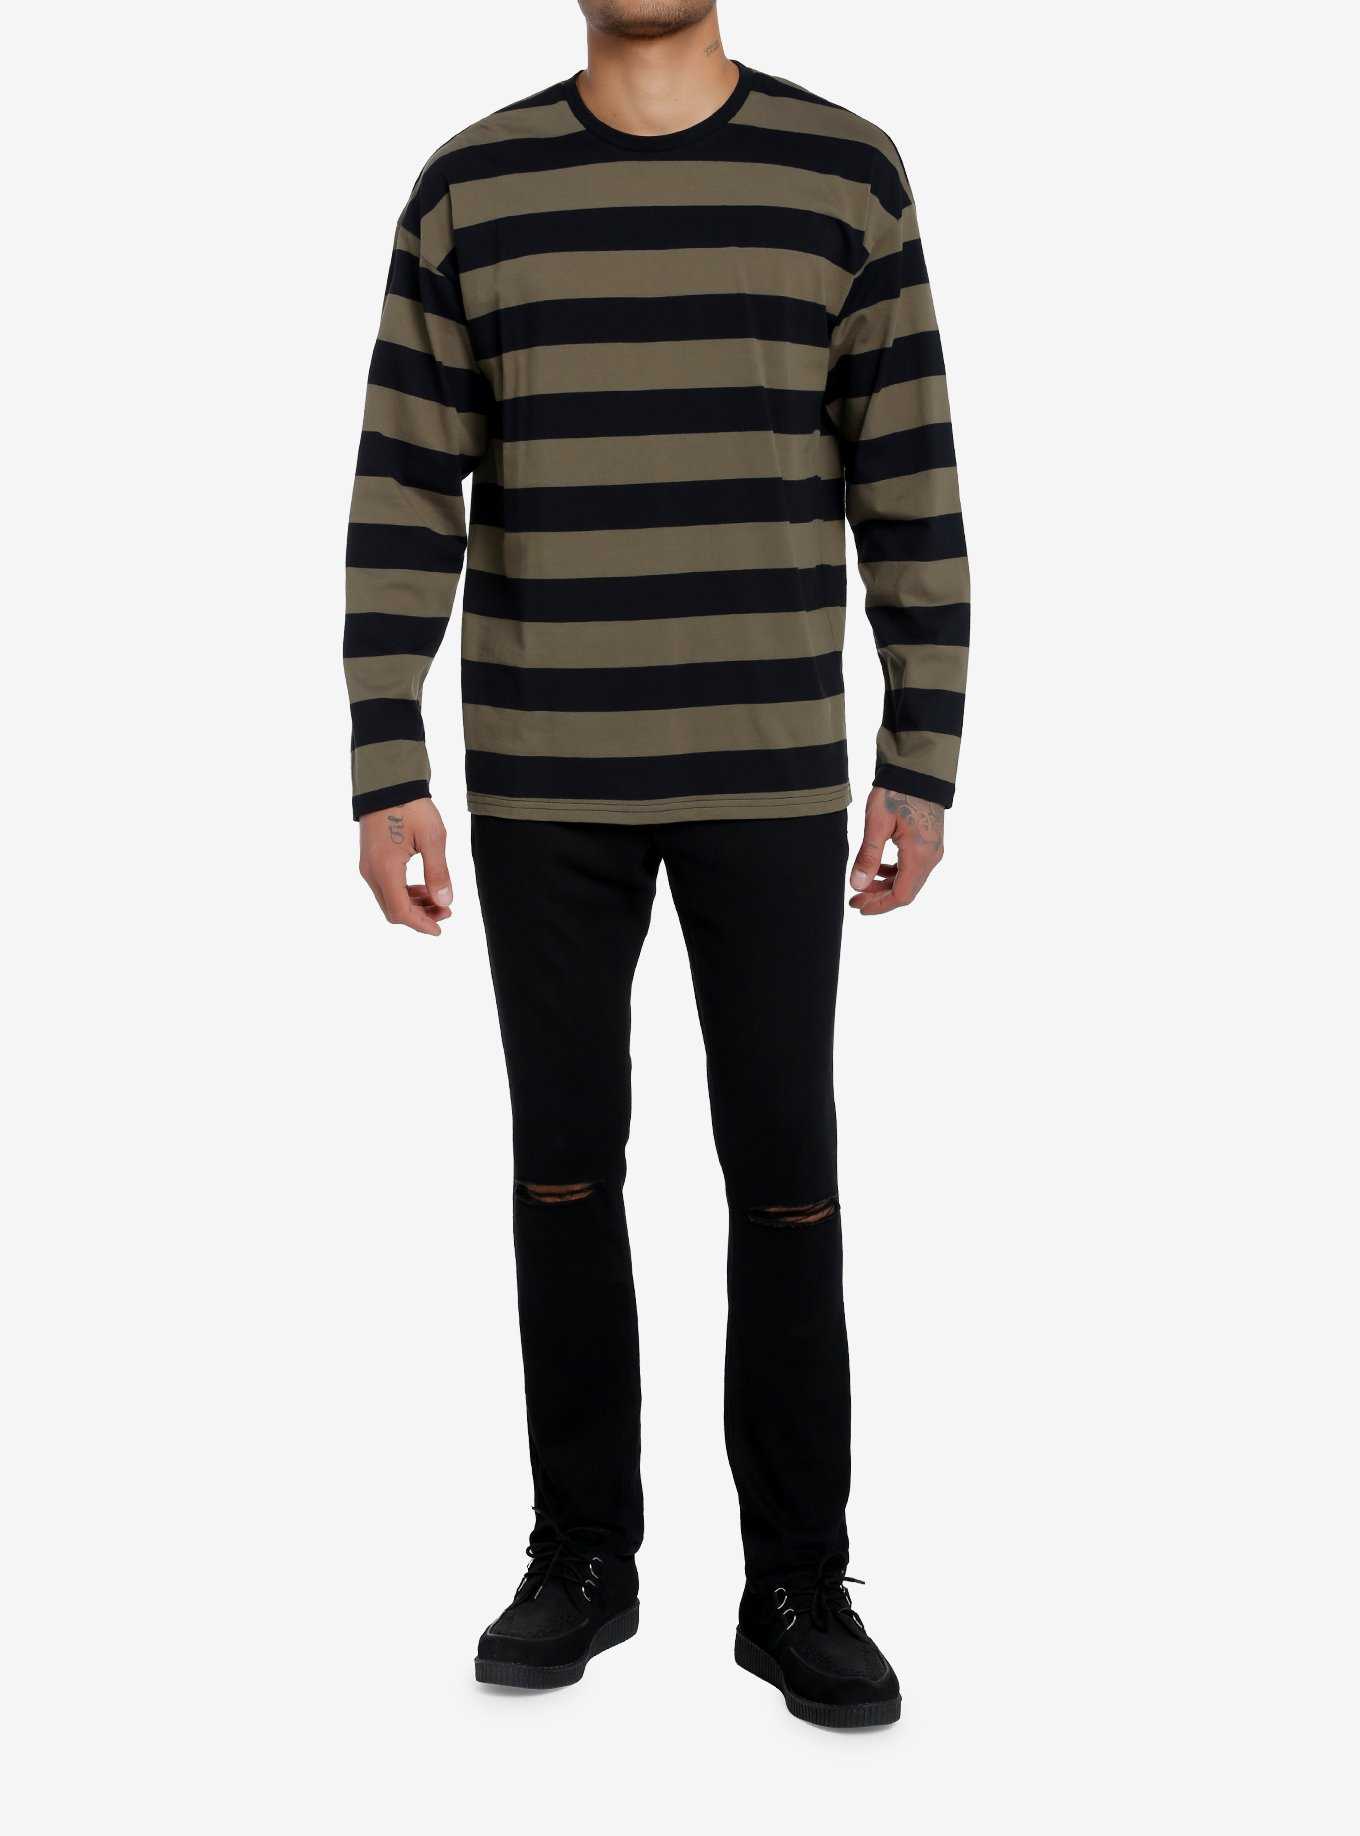 Social Collision Olive & Black Stripe Long-Sleeve T-Shirt, , hi-res